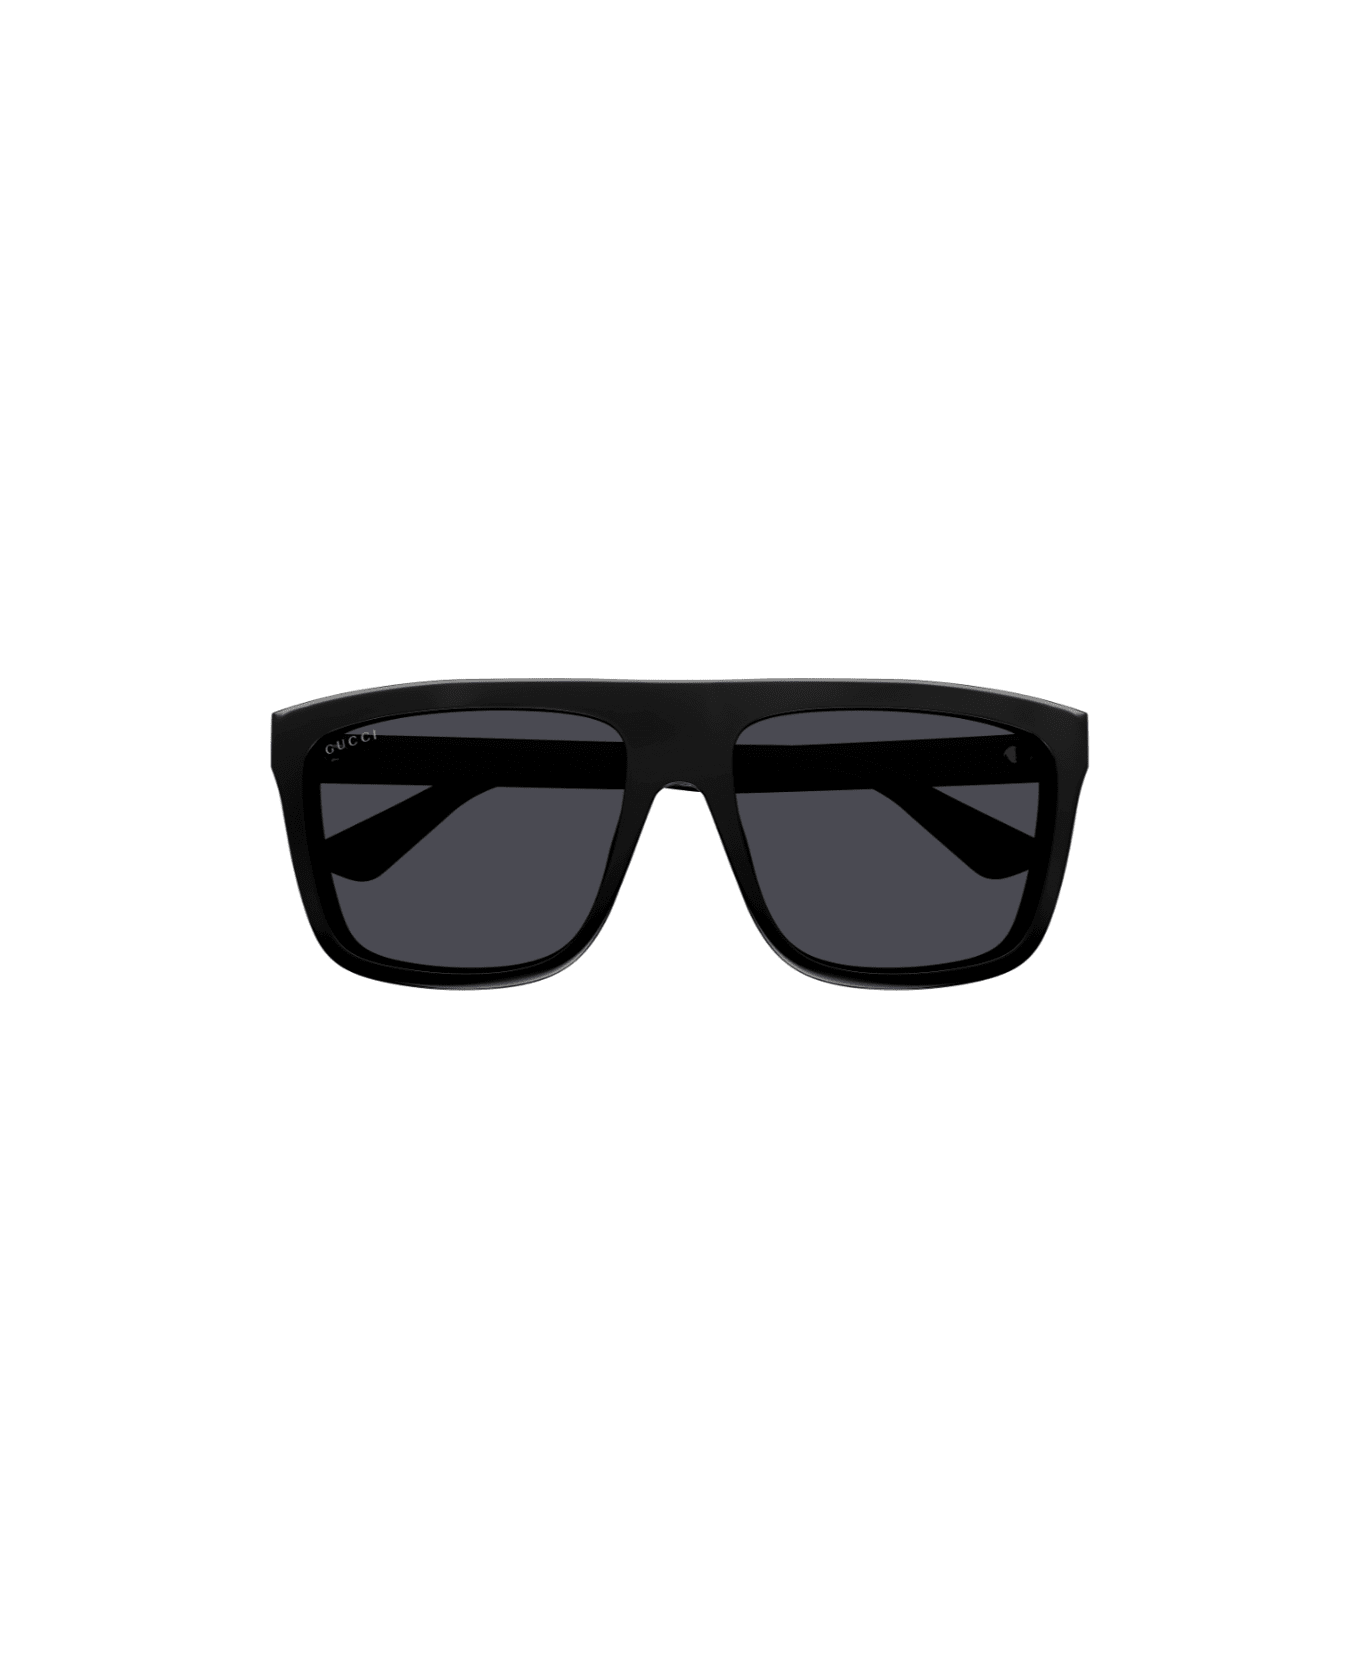 Gucci Eyewear GG0748 001 Sunglasses サングラス